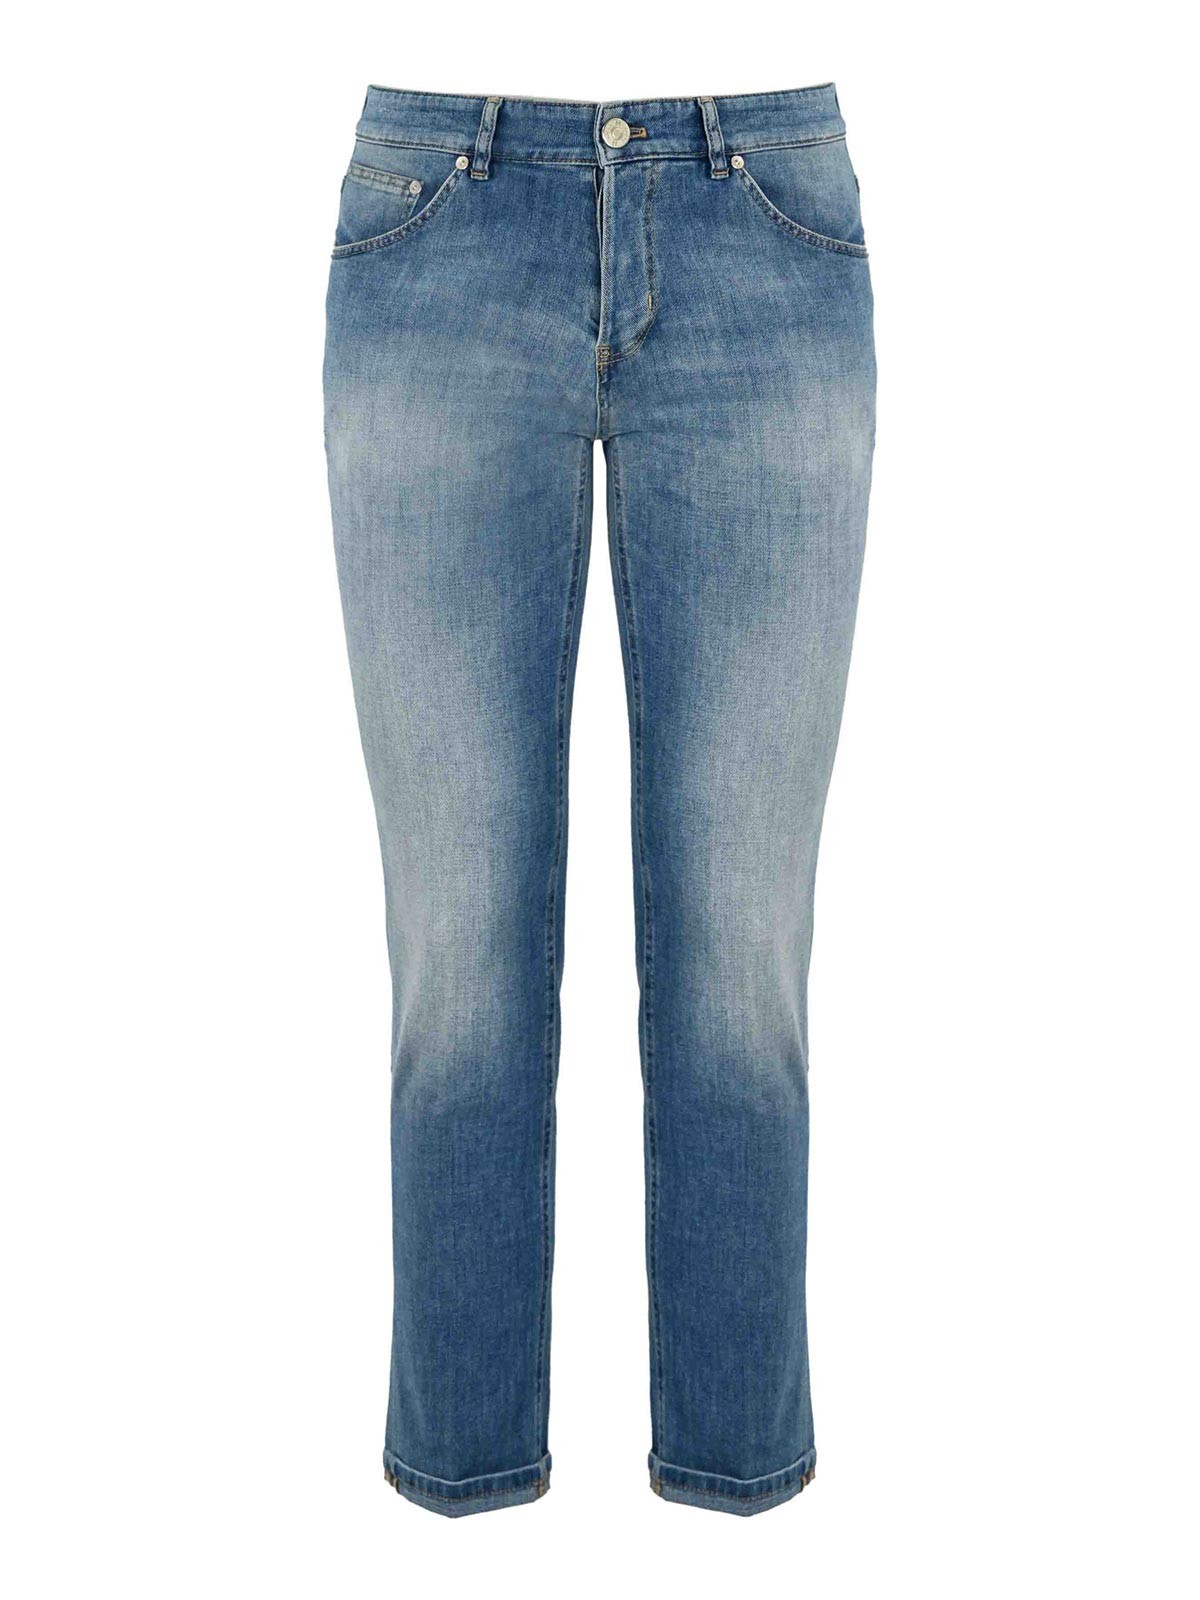 Shop Pt Torino Reggae 5 Pocket Denim Jeans